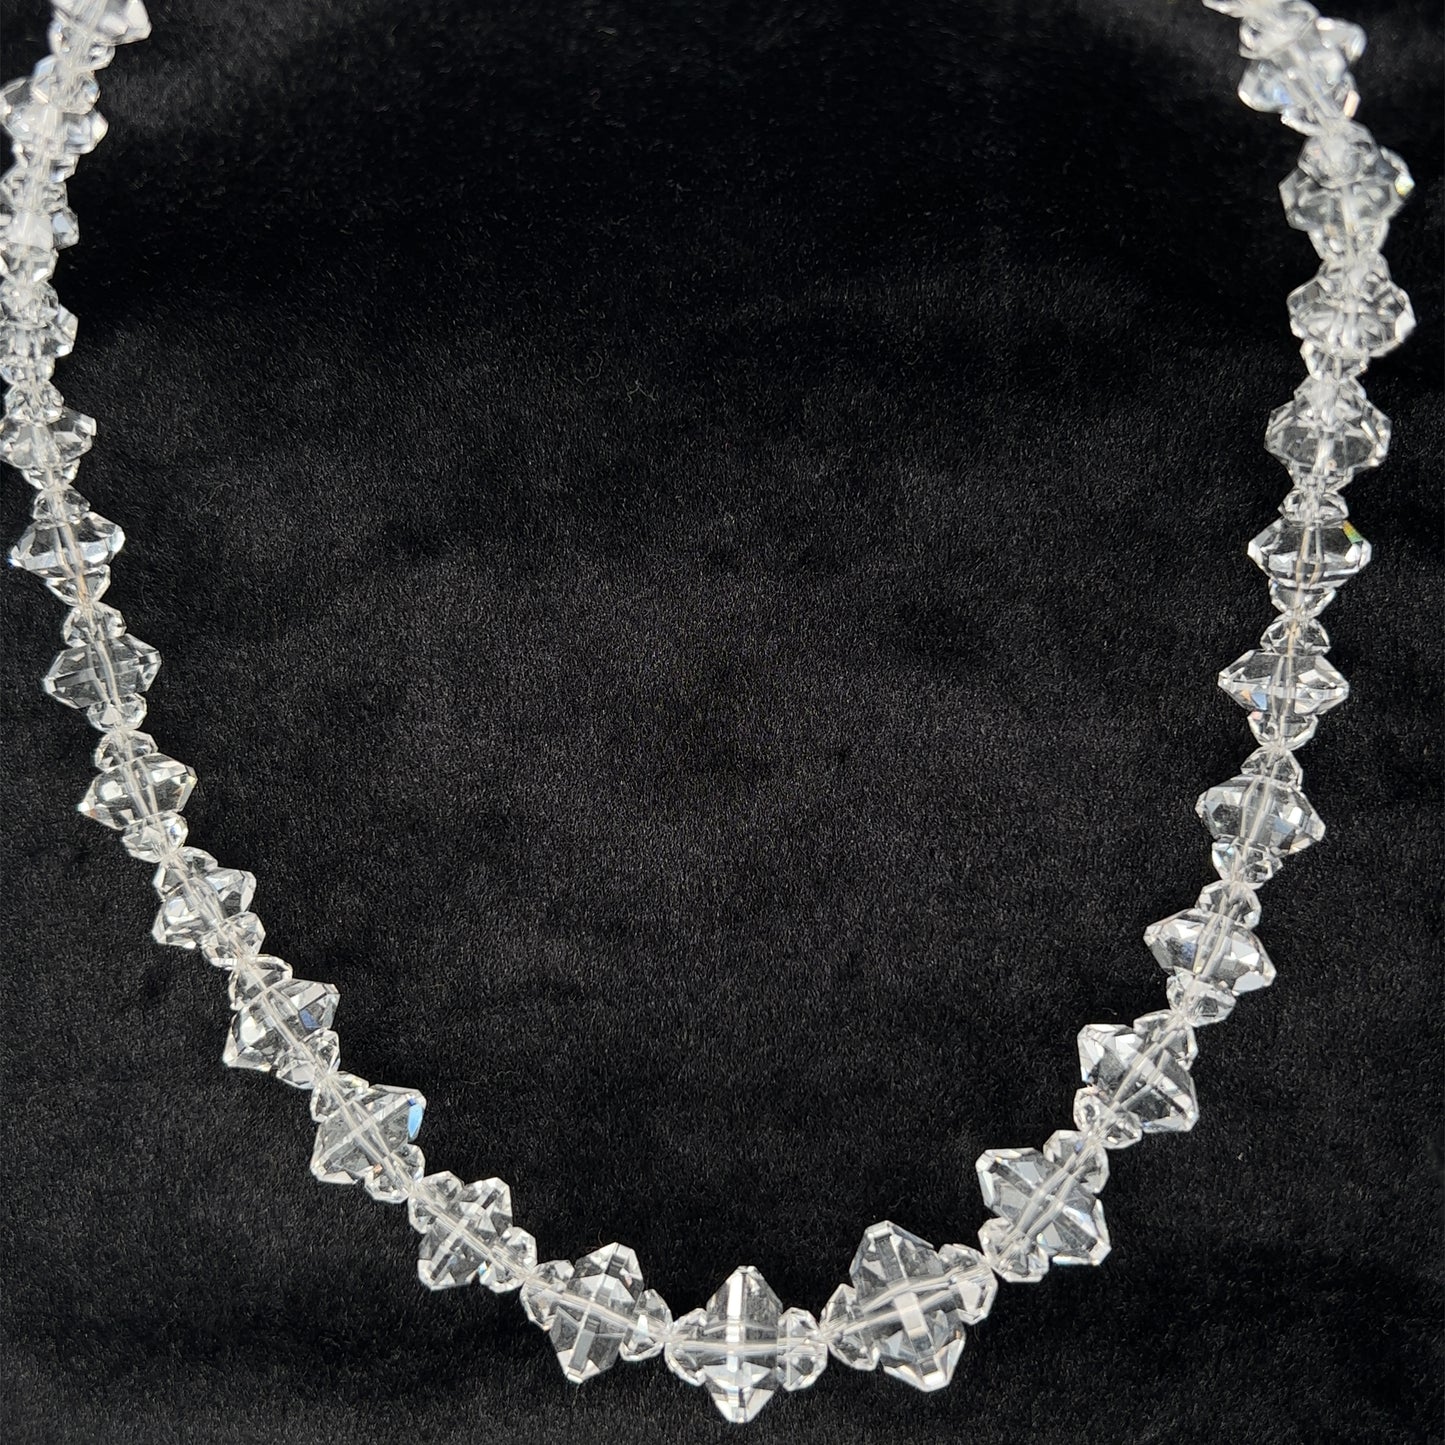 Faceted rock quartz crystal necklace